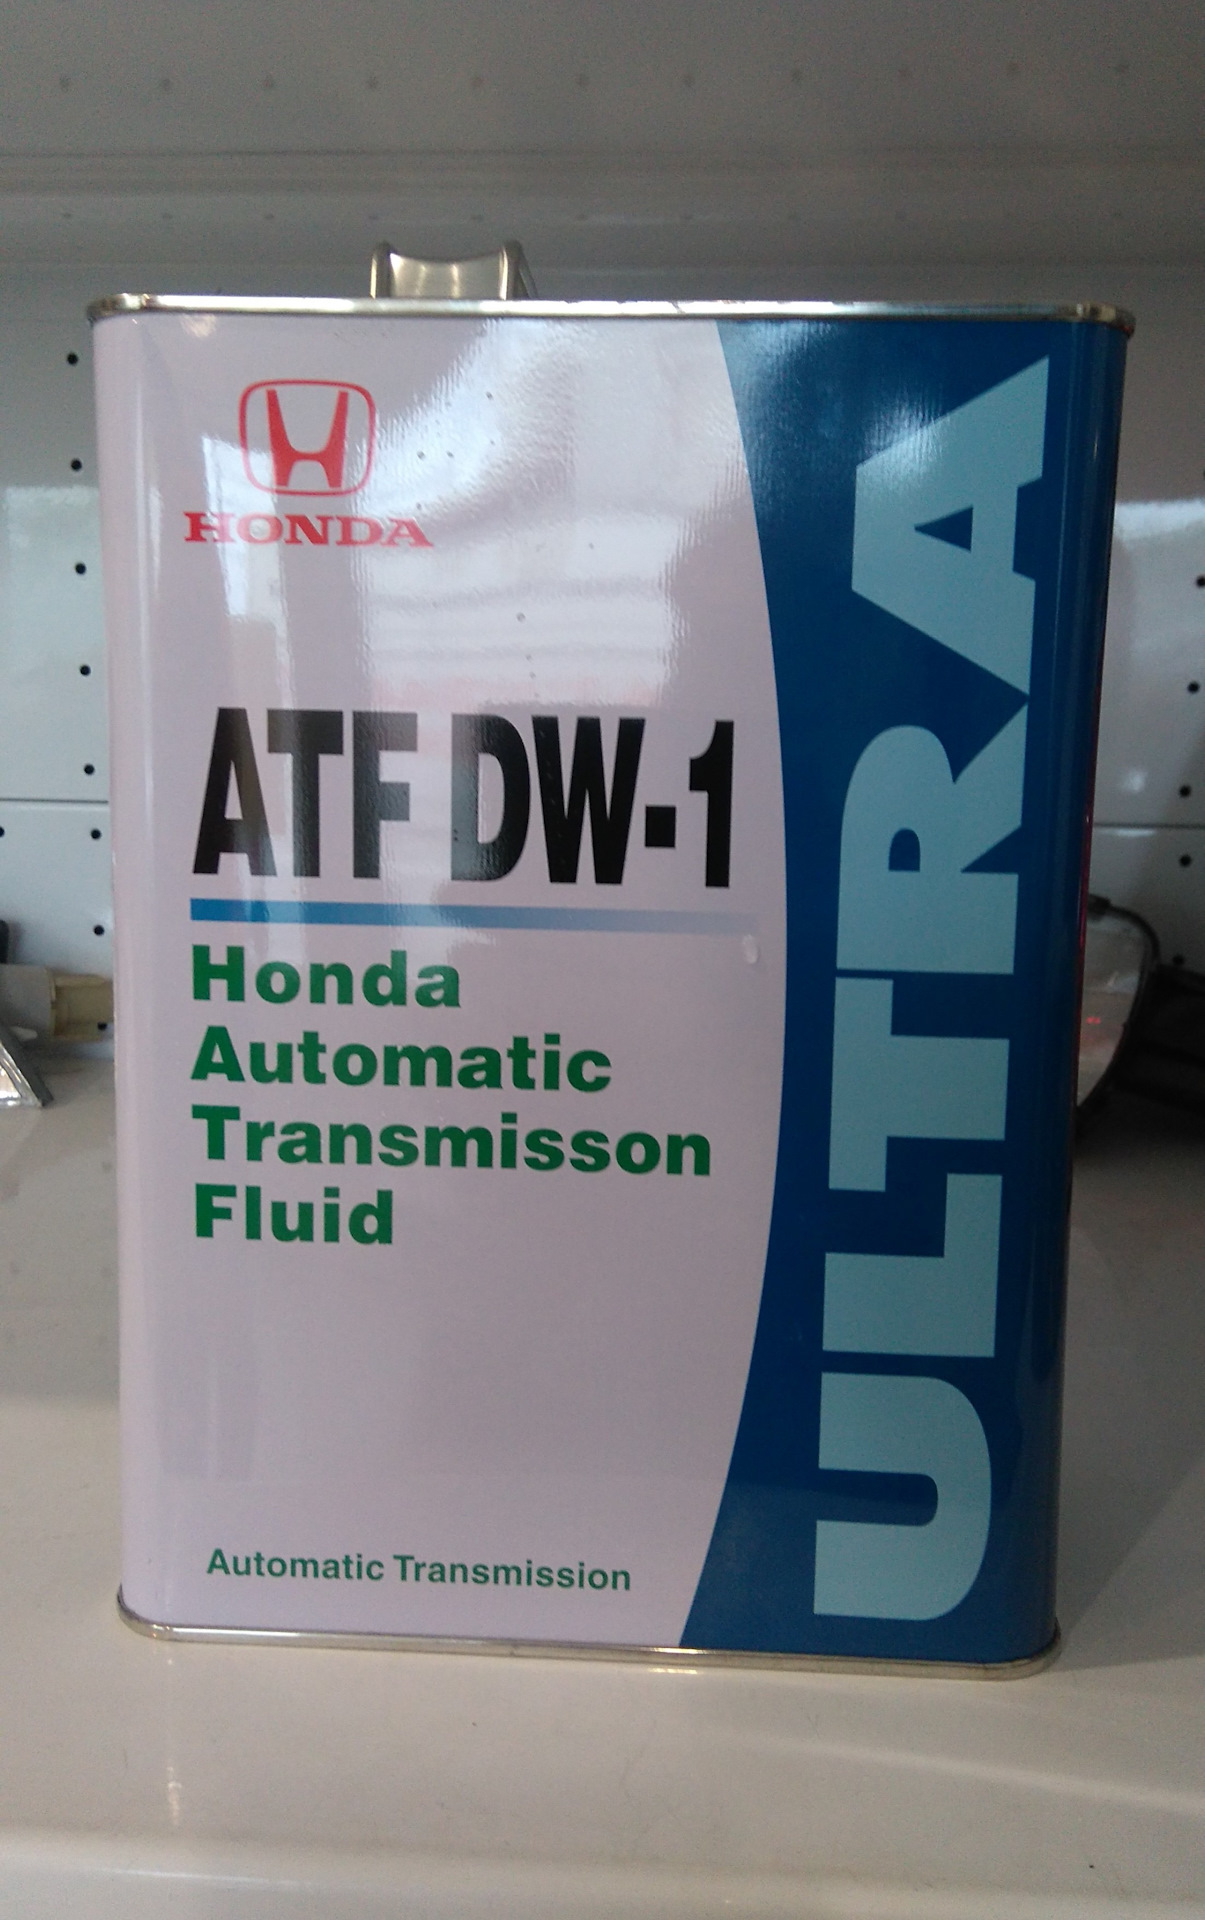 ATF dw1 Honda артикул. Honda 0826699904. Масло Хонда dw1 артикул. ATF dw1. Артикулы масла хонда